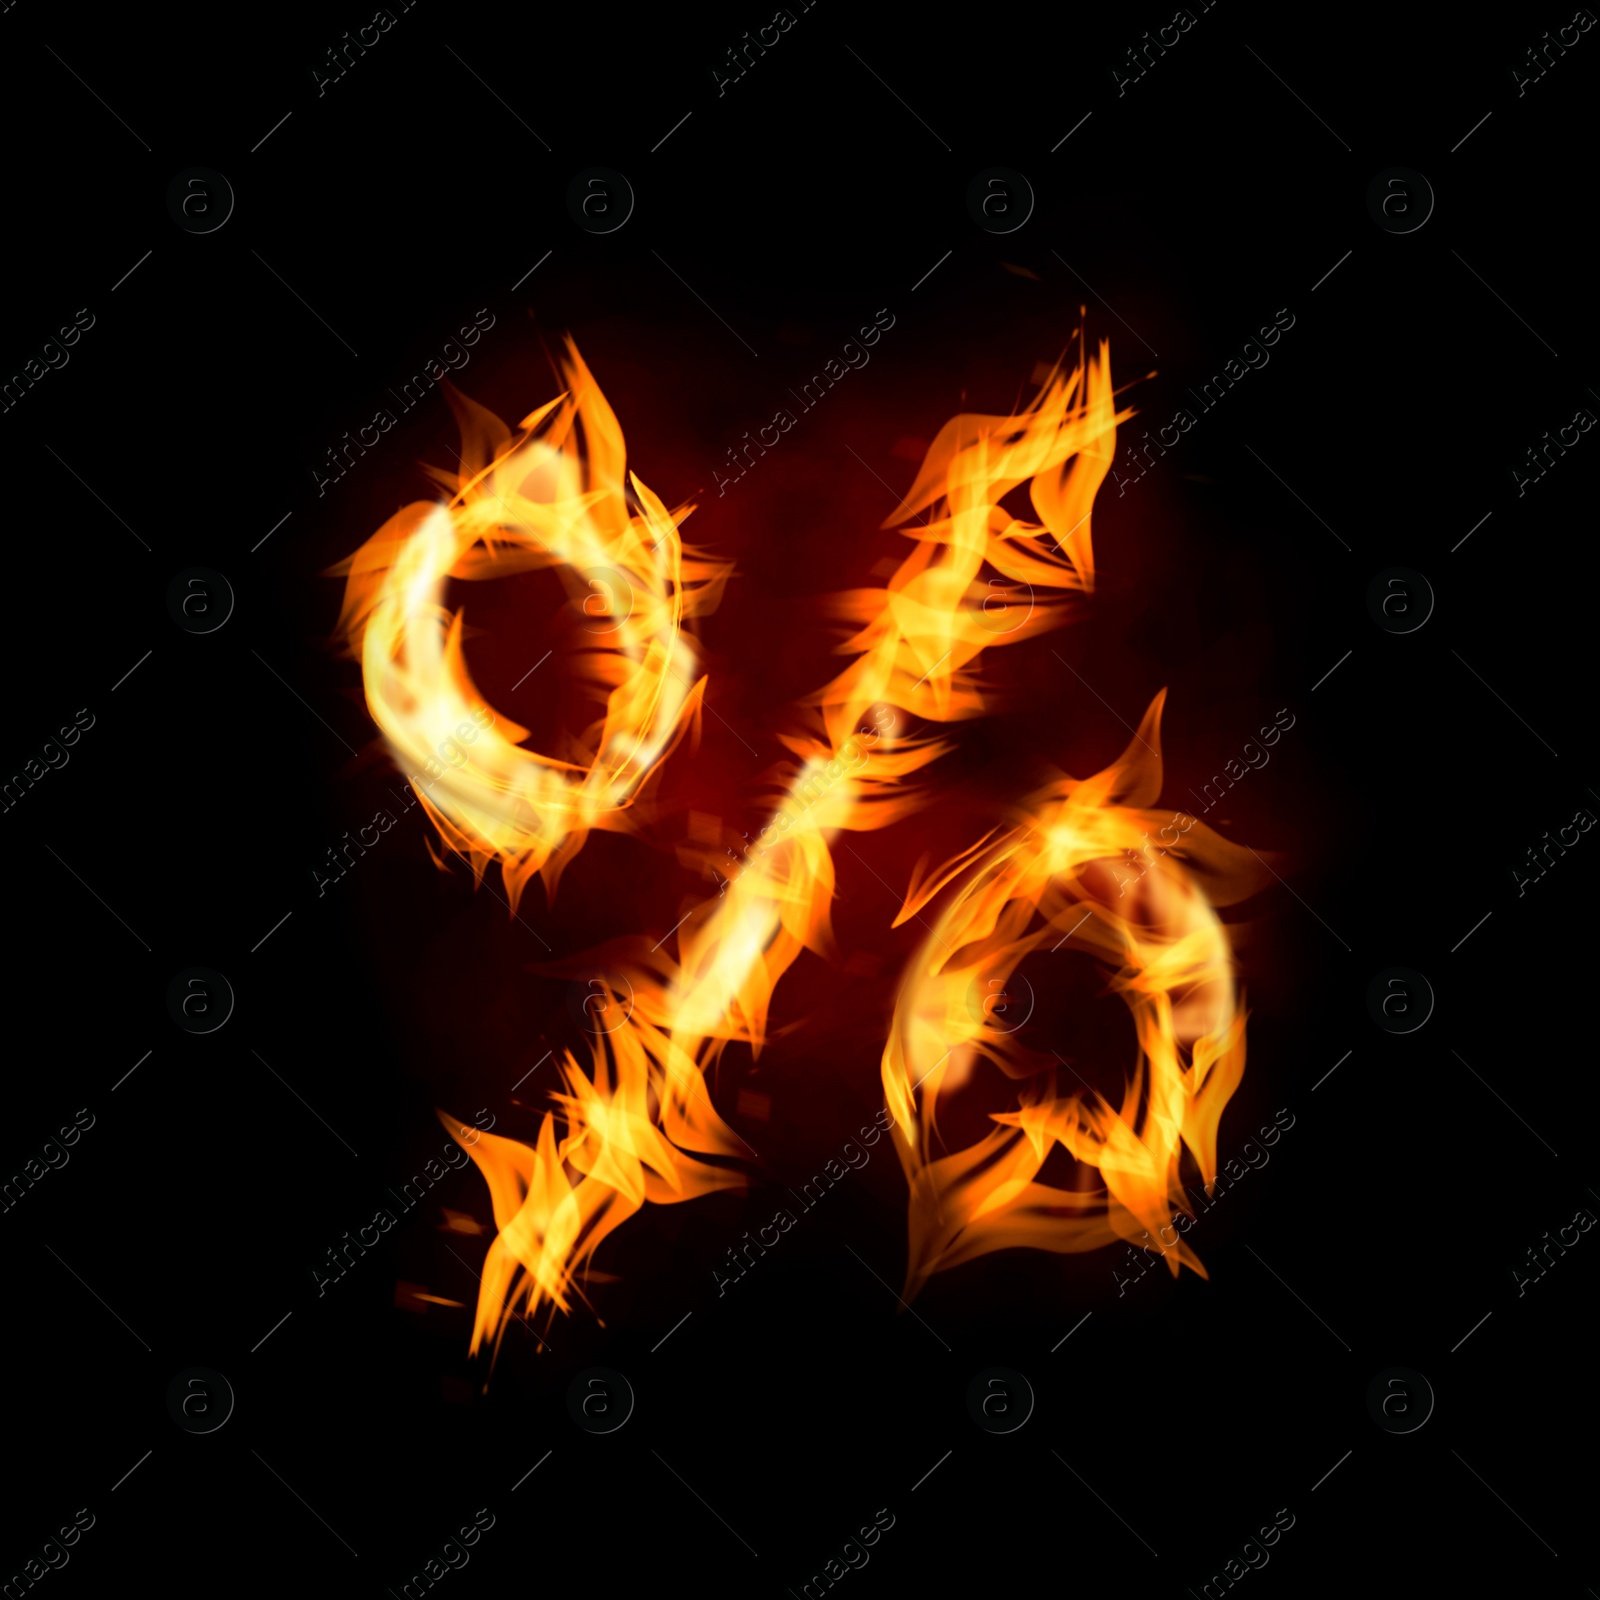 Image of Bright flaming percent symbol on black background